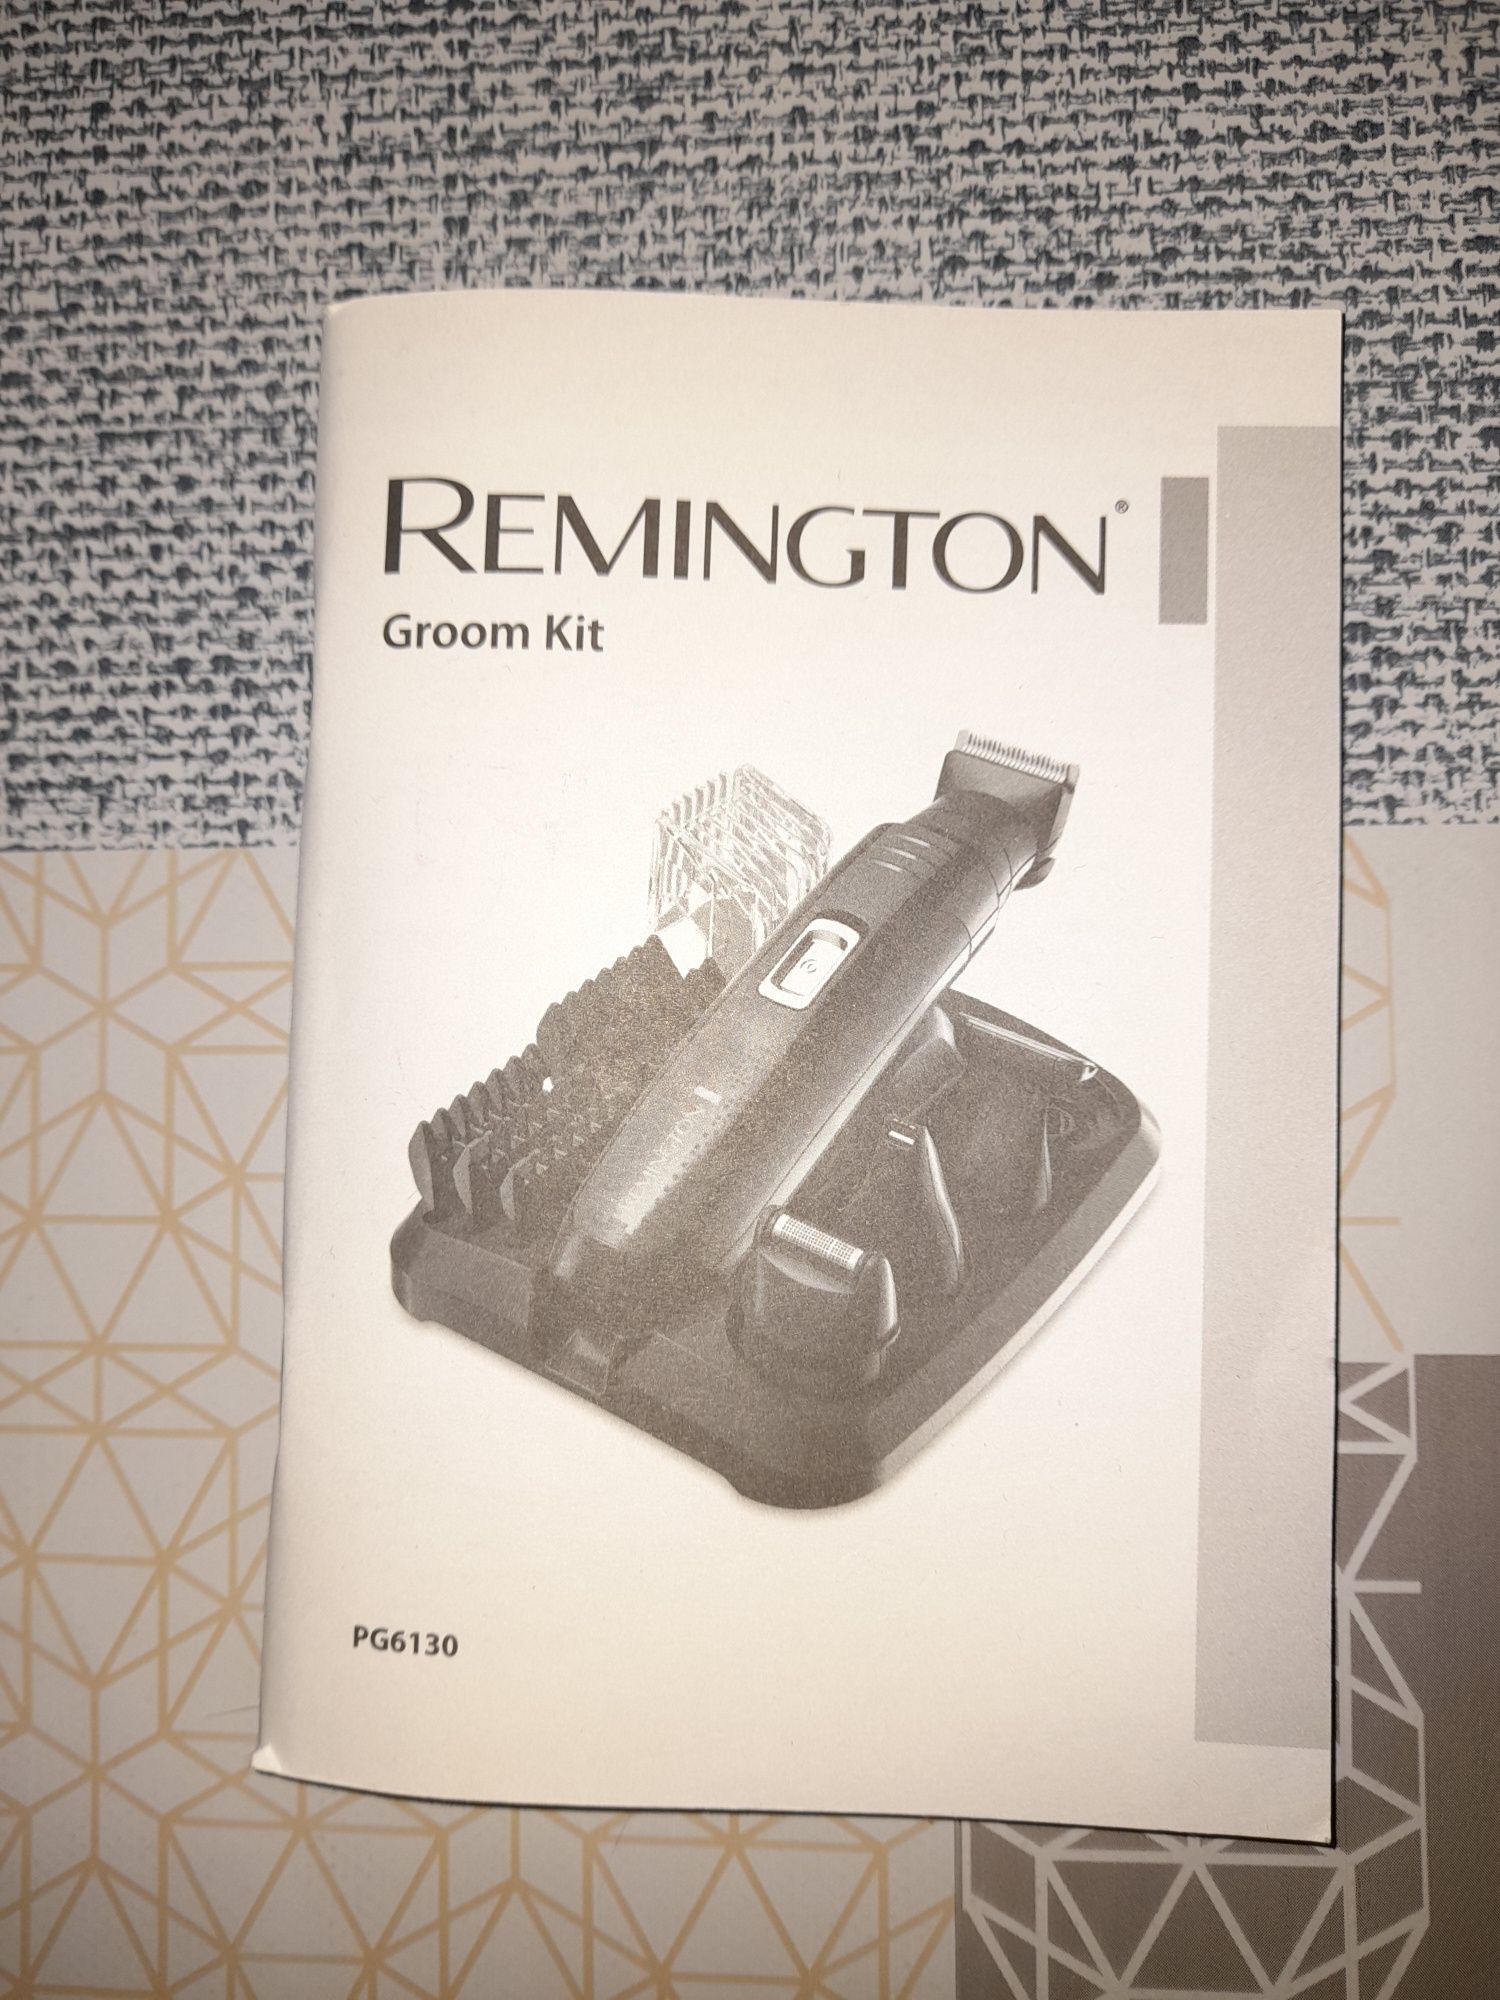 Groomkit remington